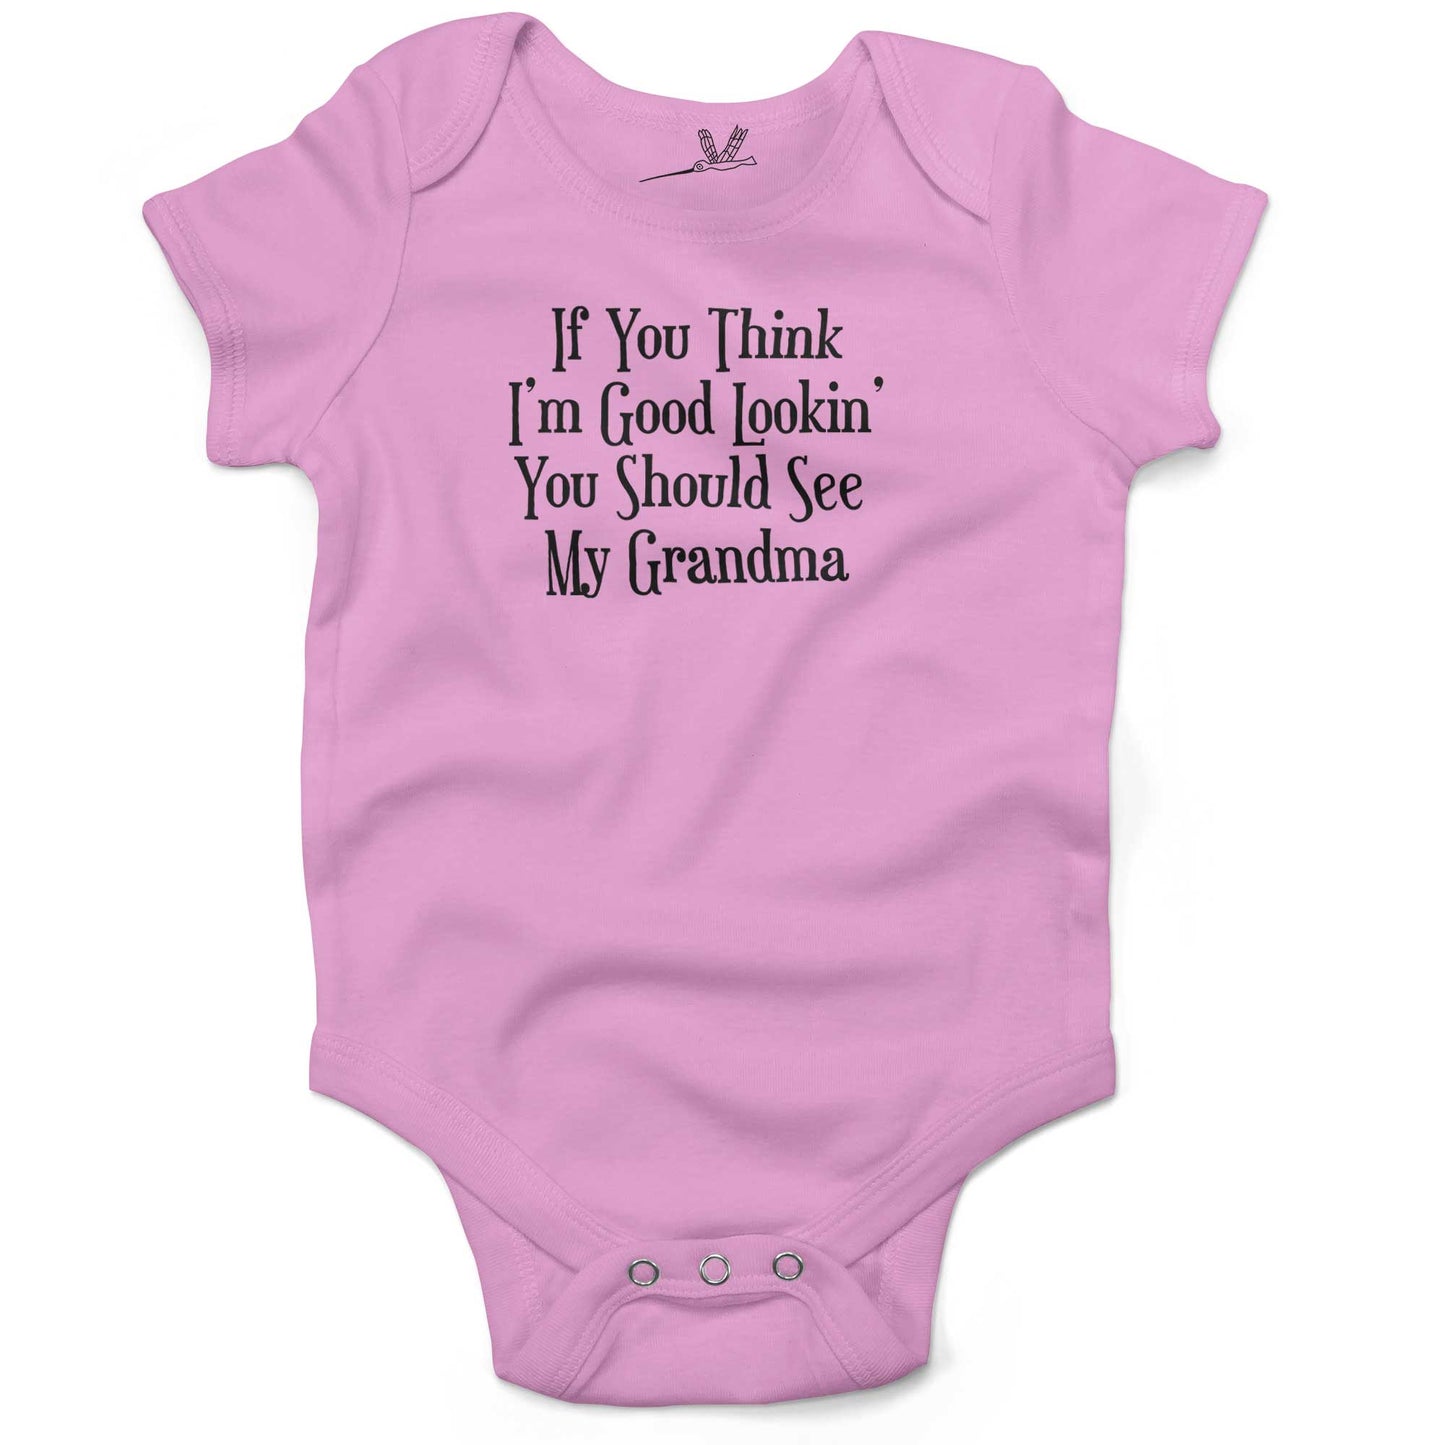 If You Think I'm Good Lookin', You Should See My Grandma Infant Bodysuit or Raglan Tee-Organic Pink-3-6 months